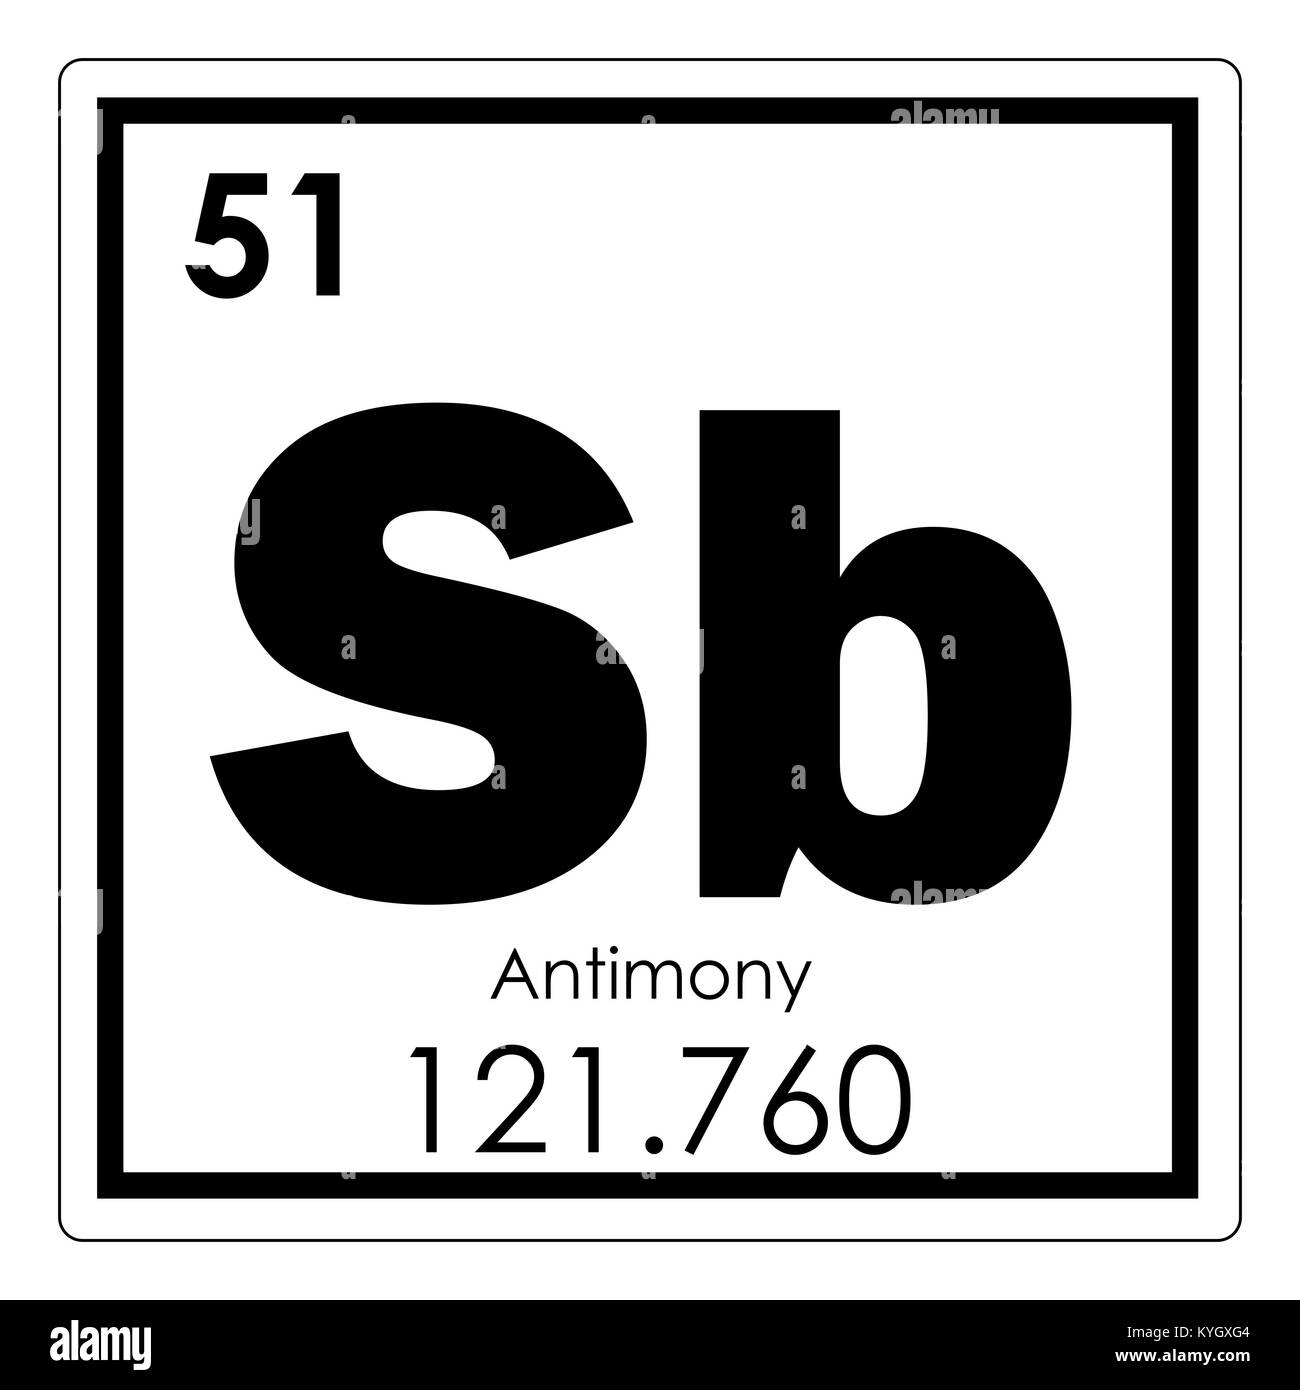 sb element